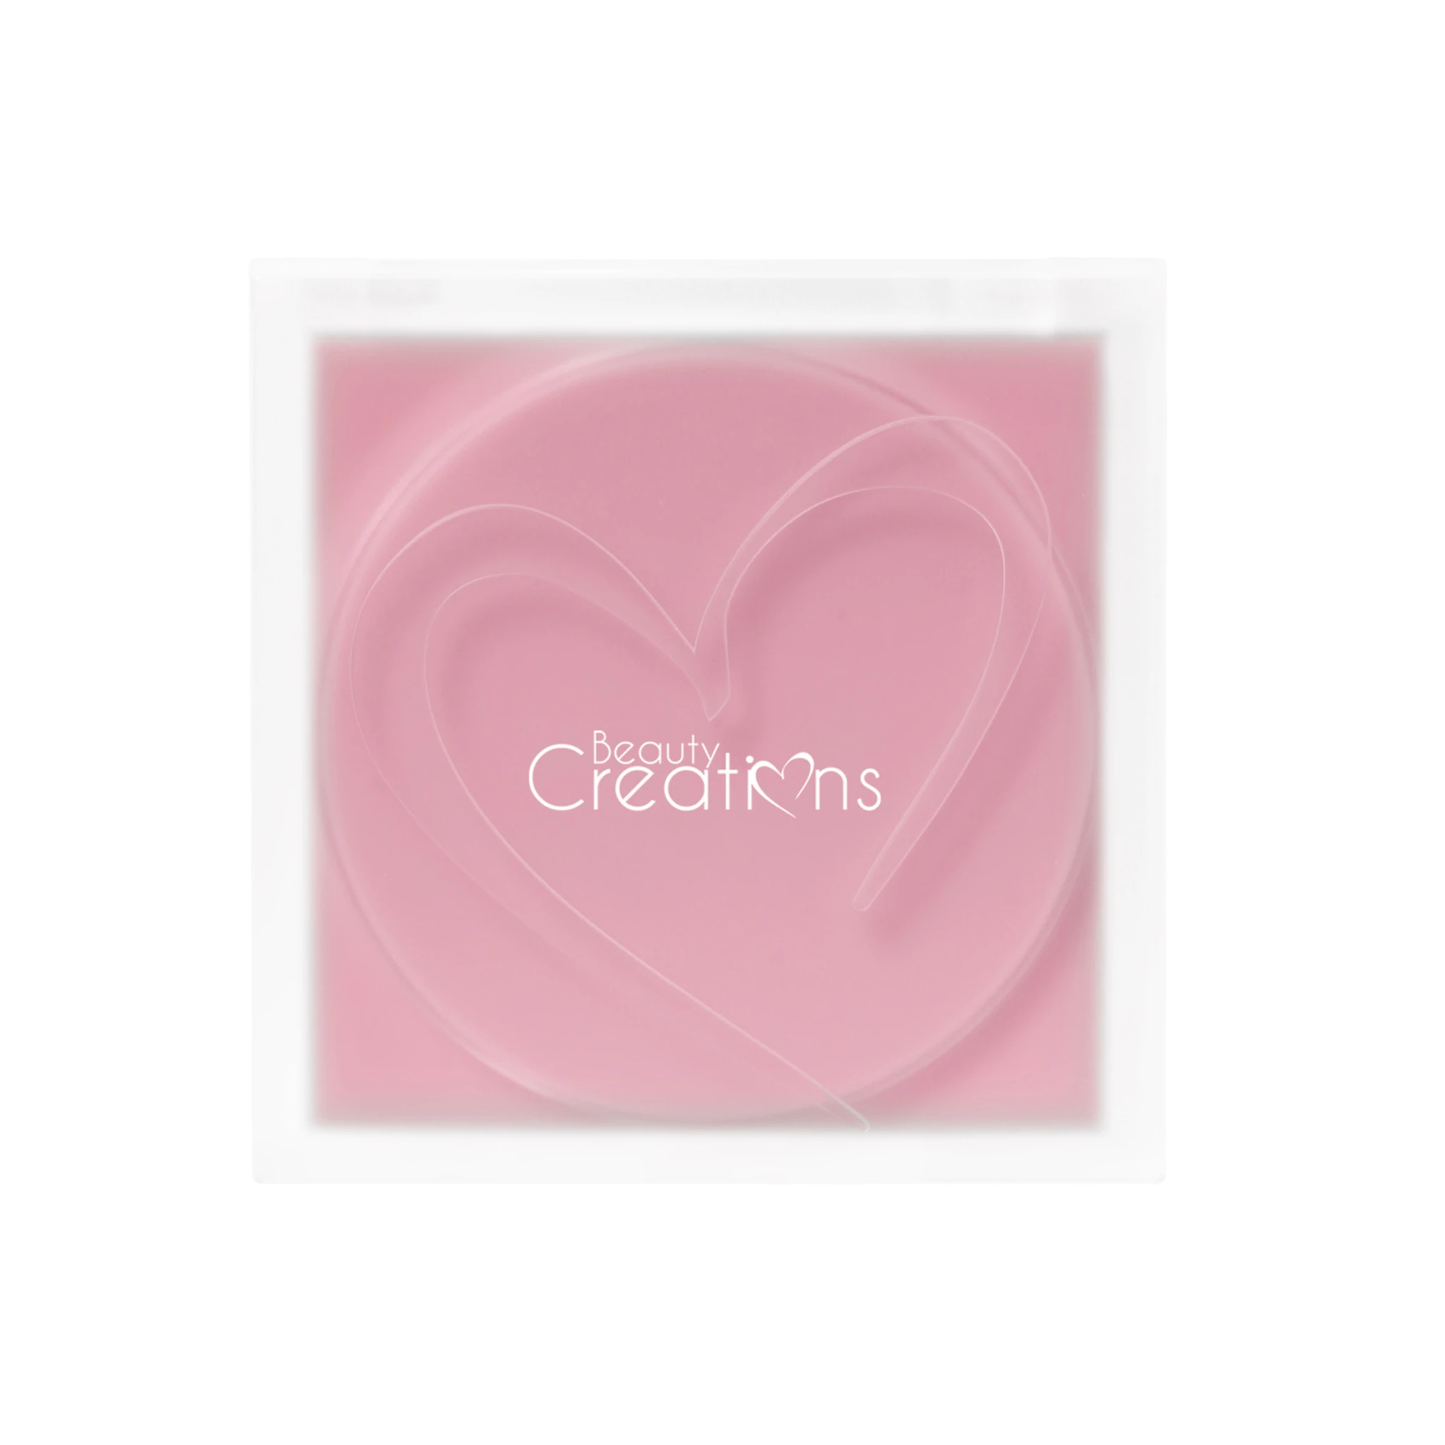 SB08 Beauty Creations Hush Blush - Caress Me